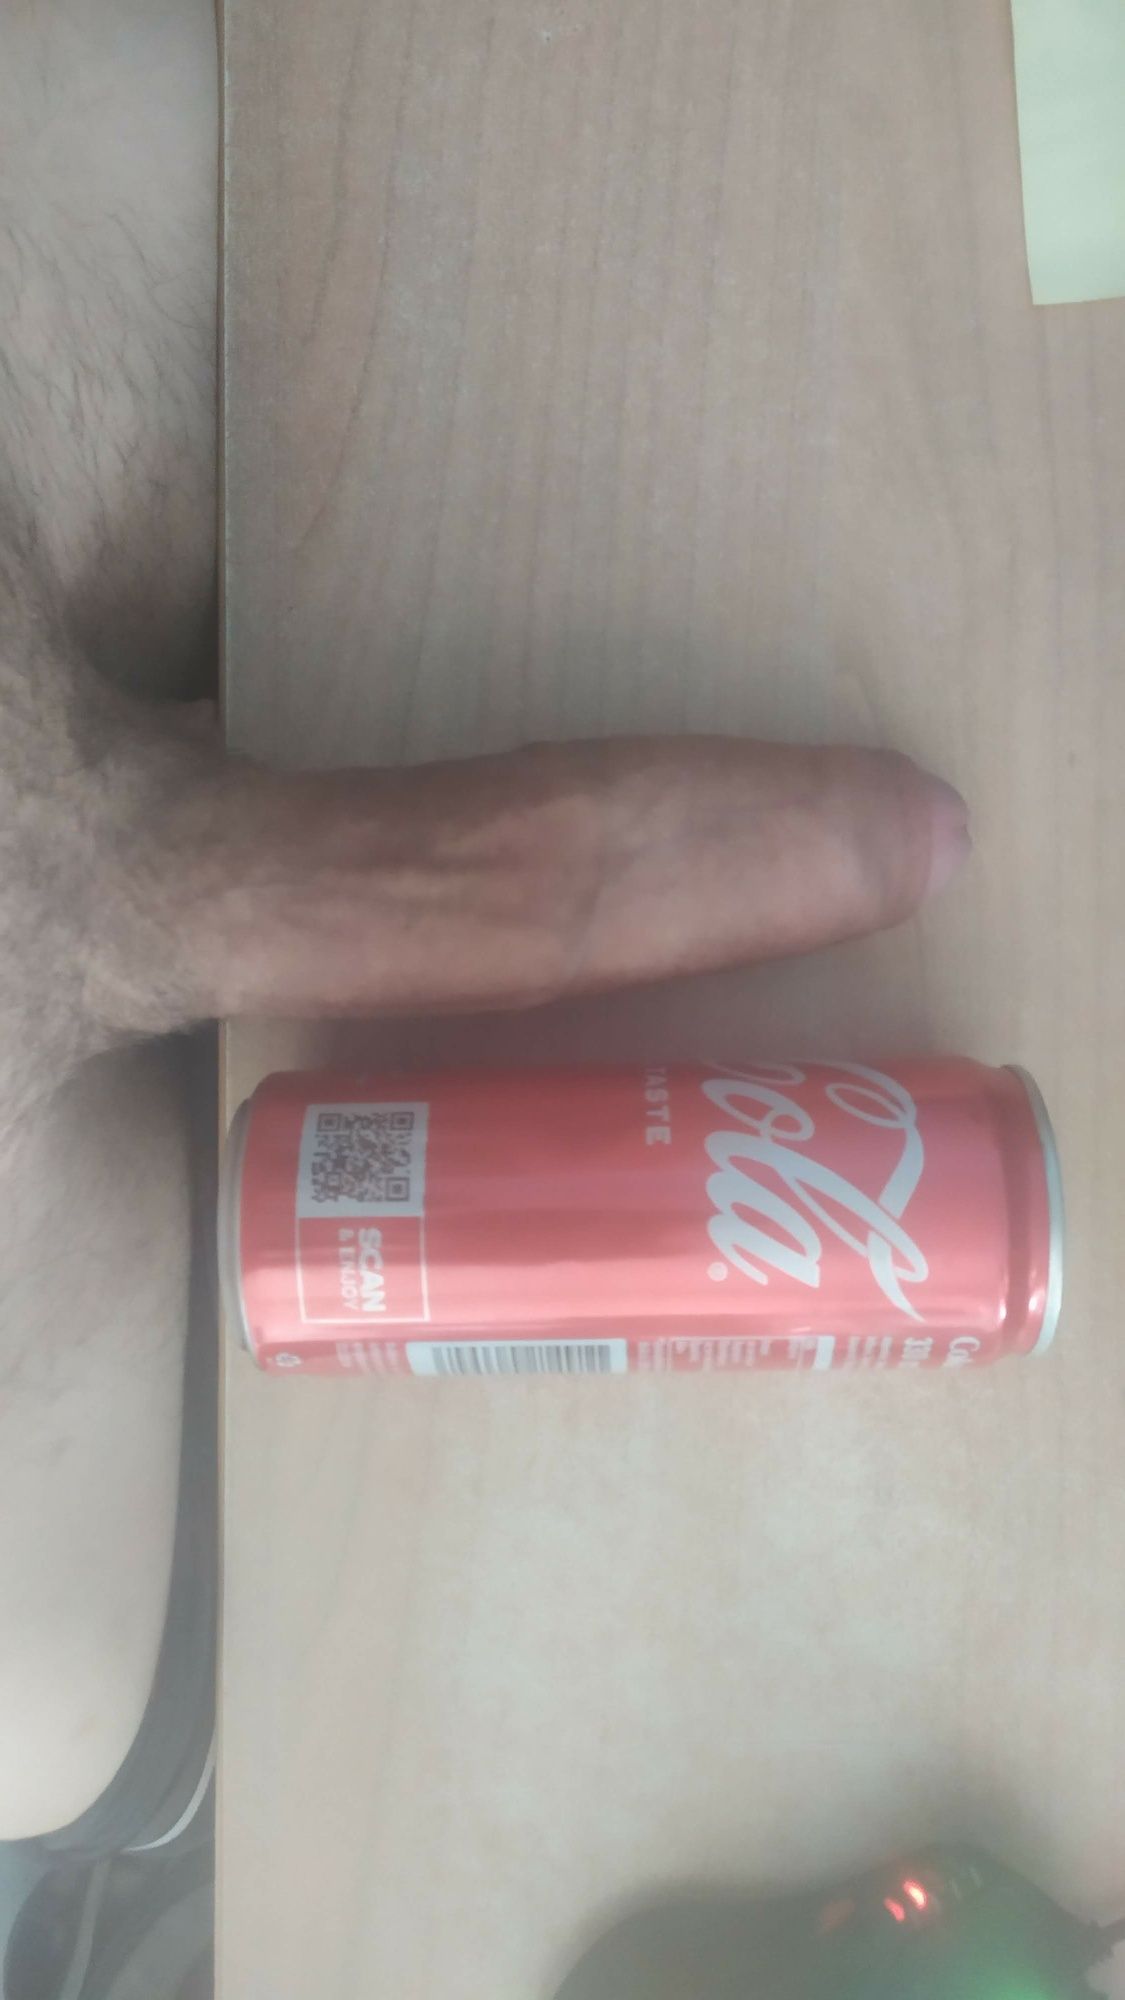 Coca cola anyone?